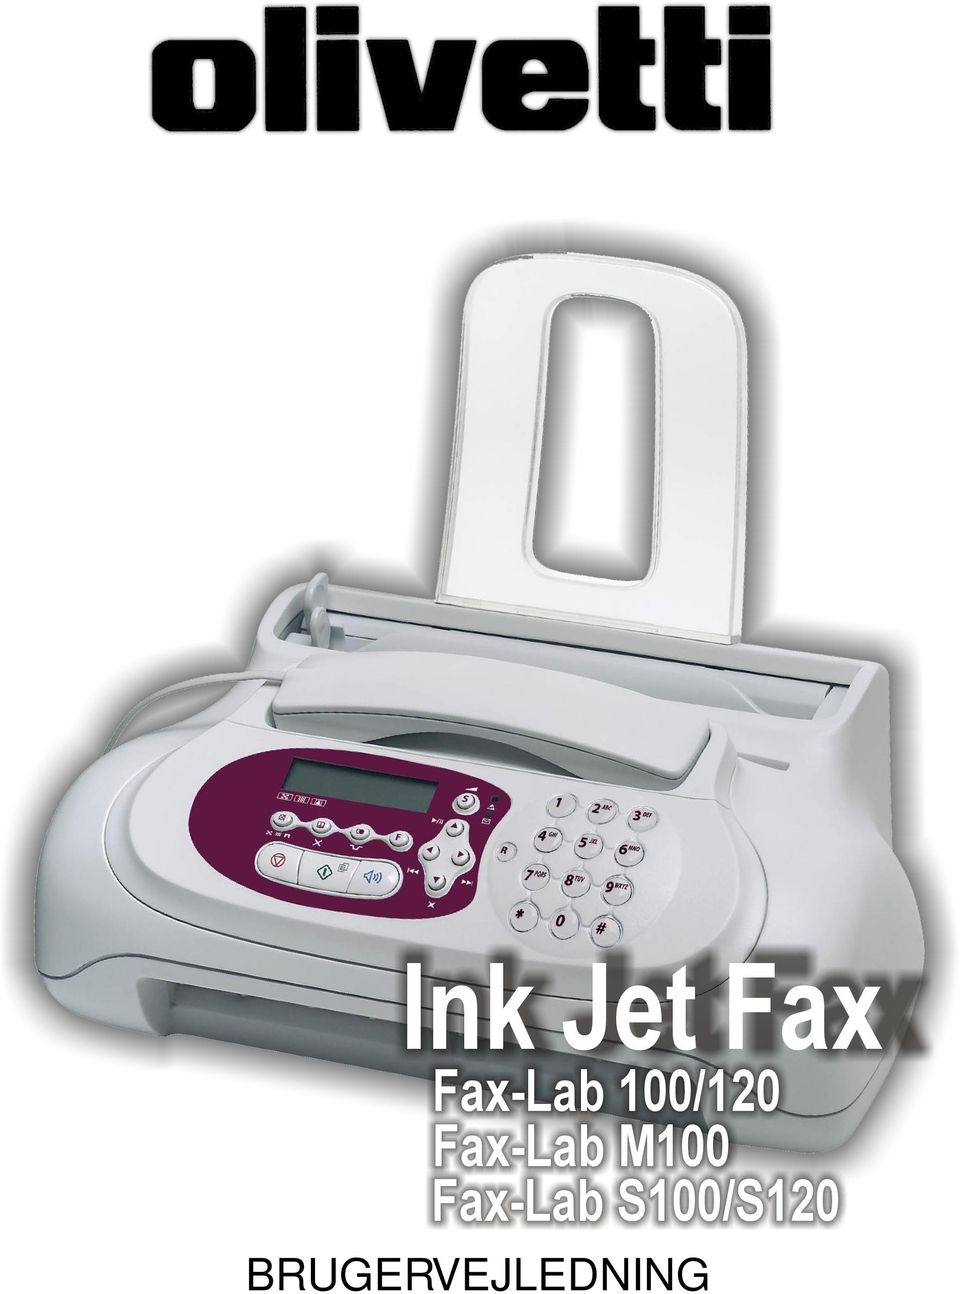 Fax-Lab M100